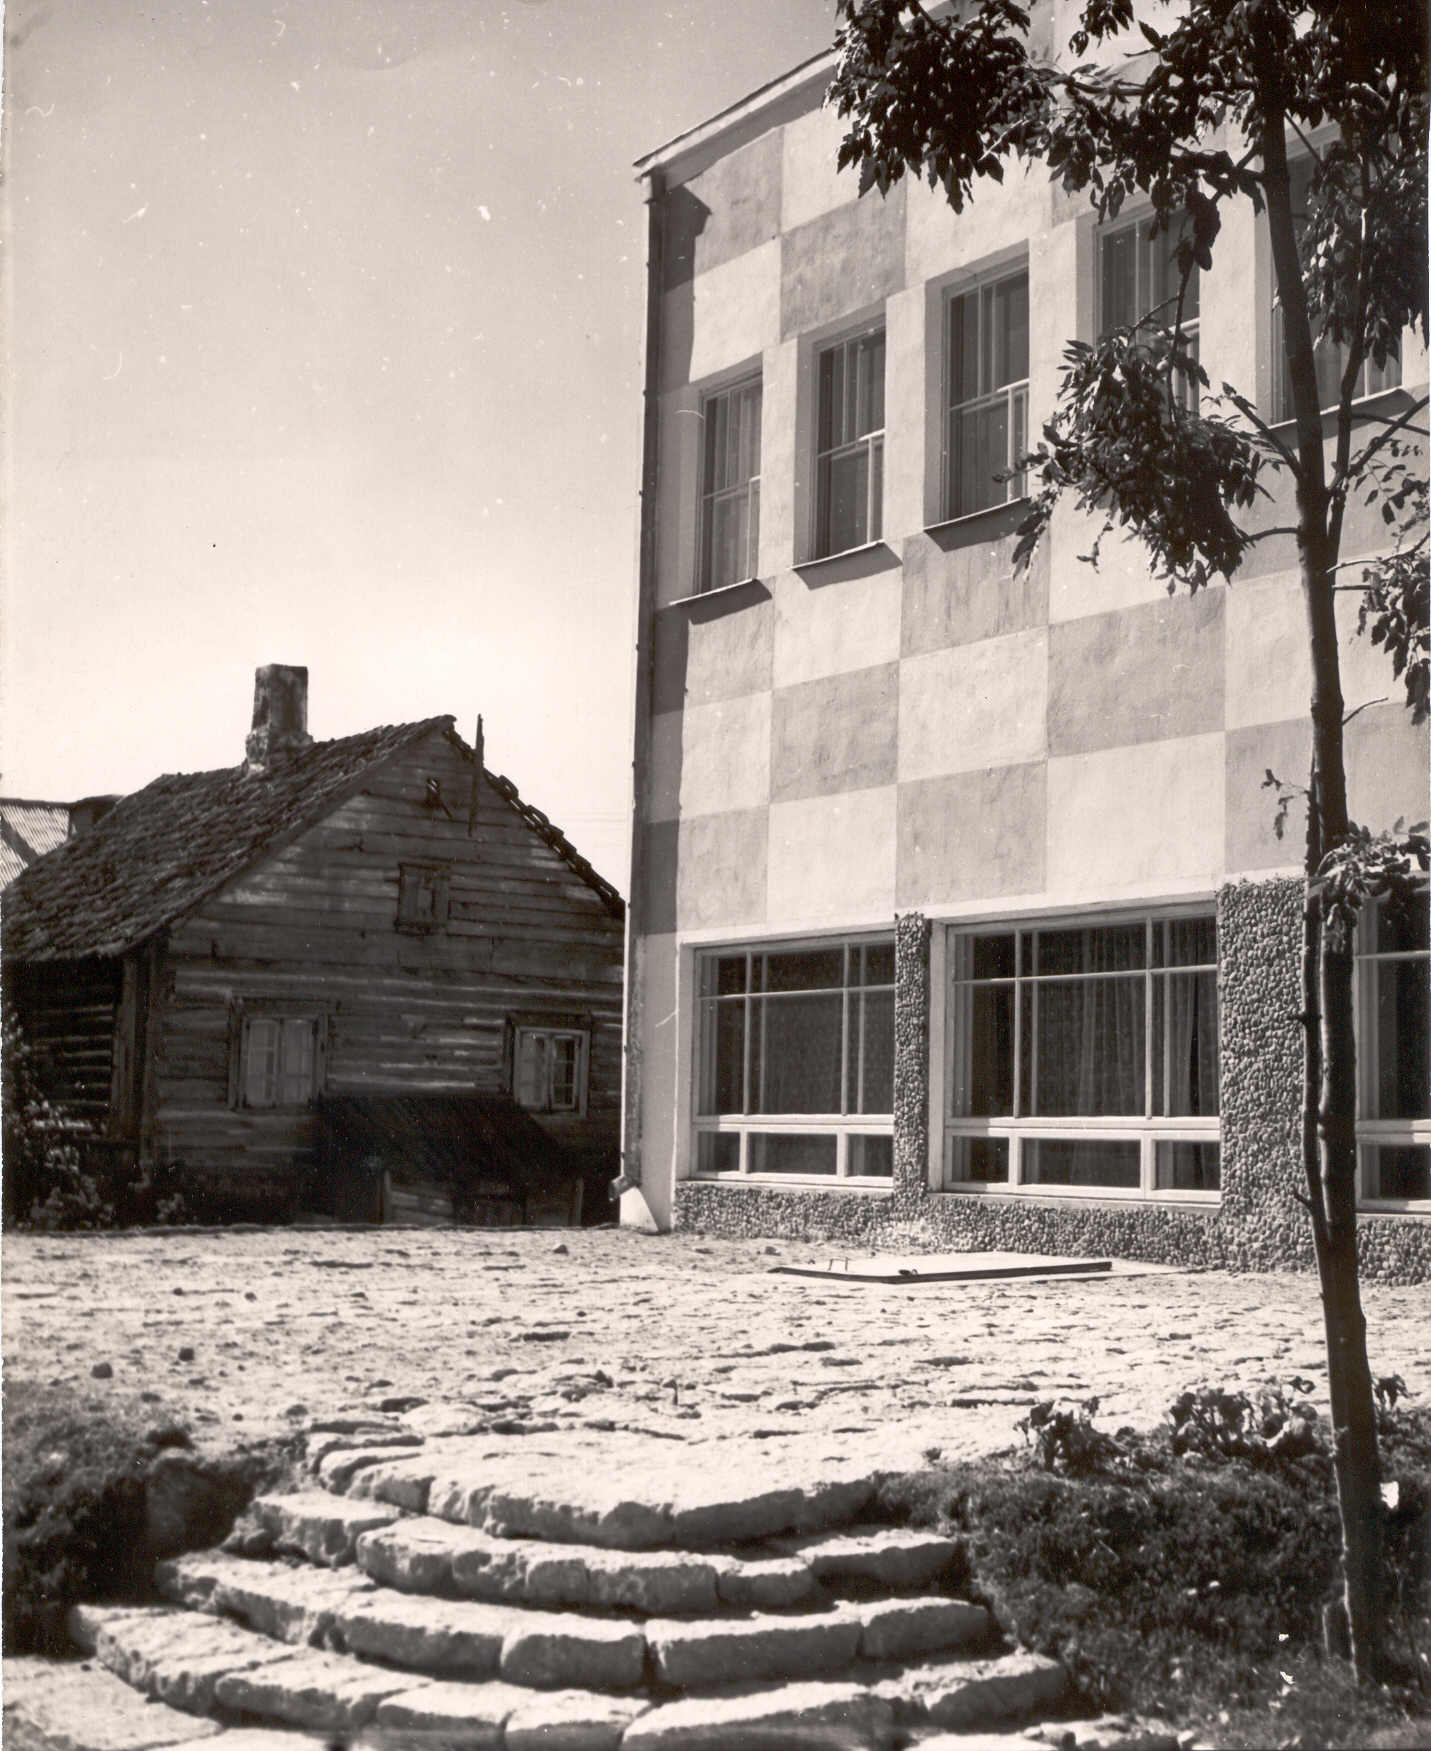 Photo. Võru County Cultural House "Kannel" rear view.